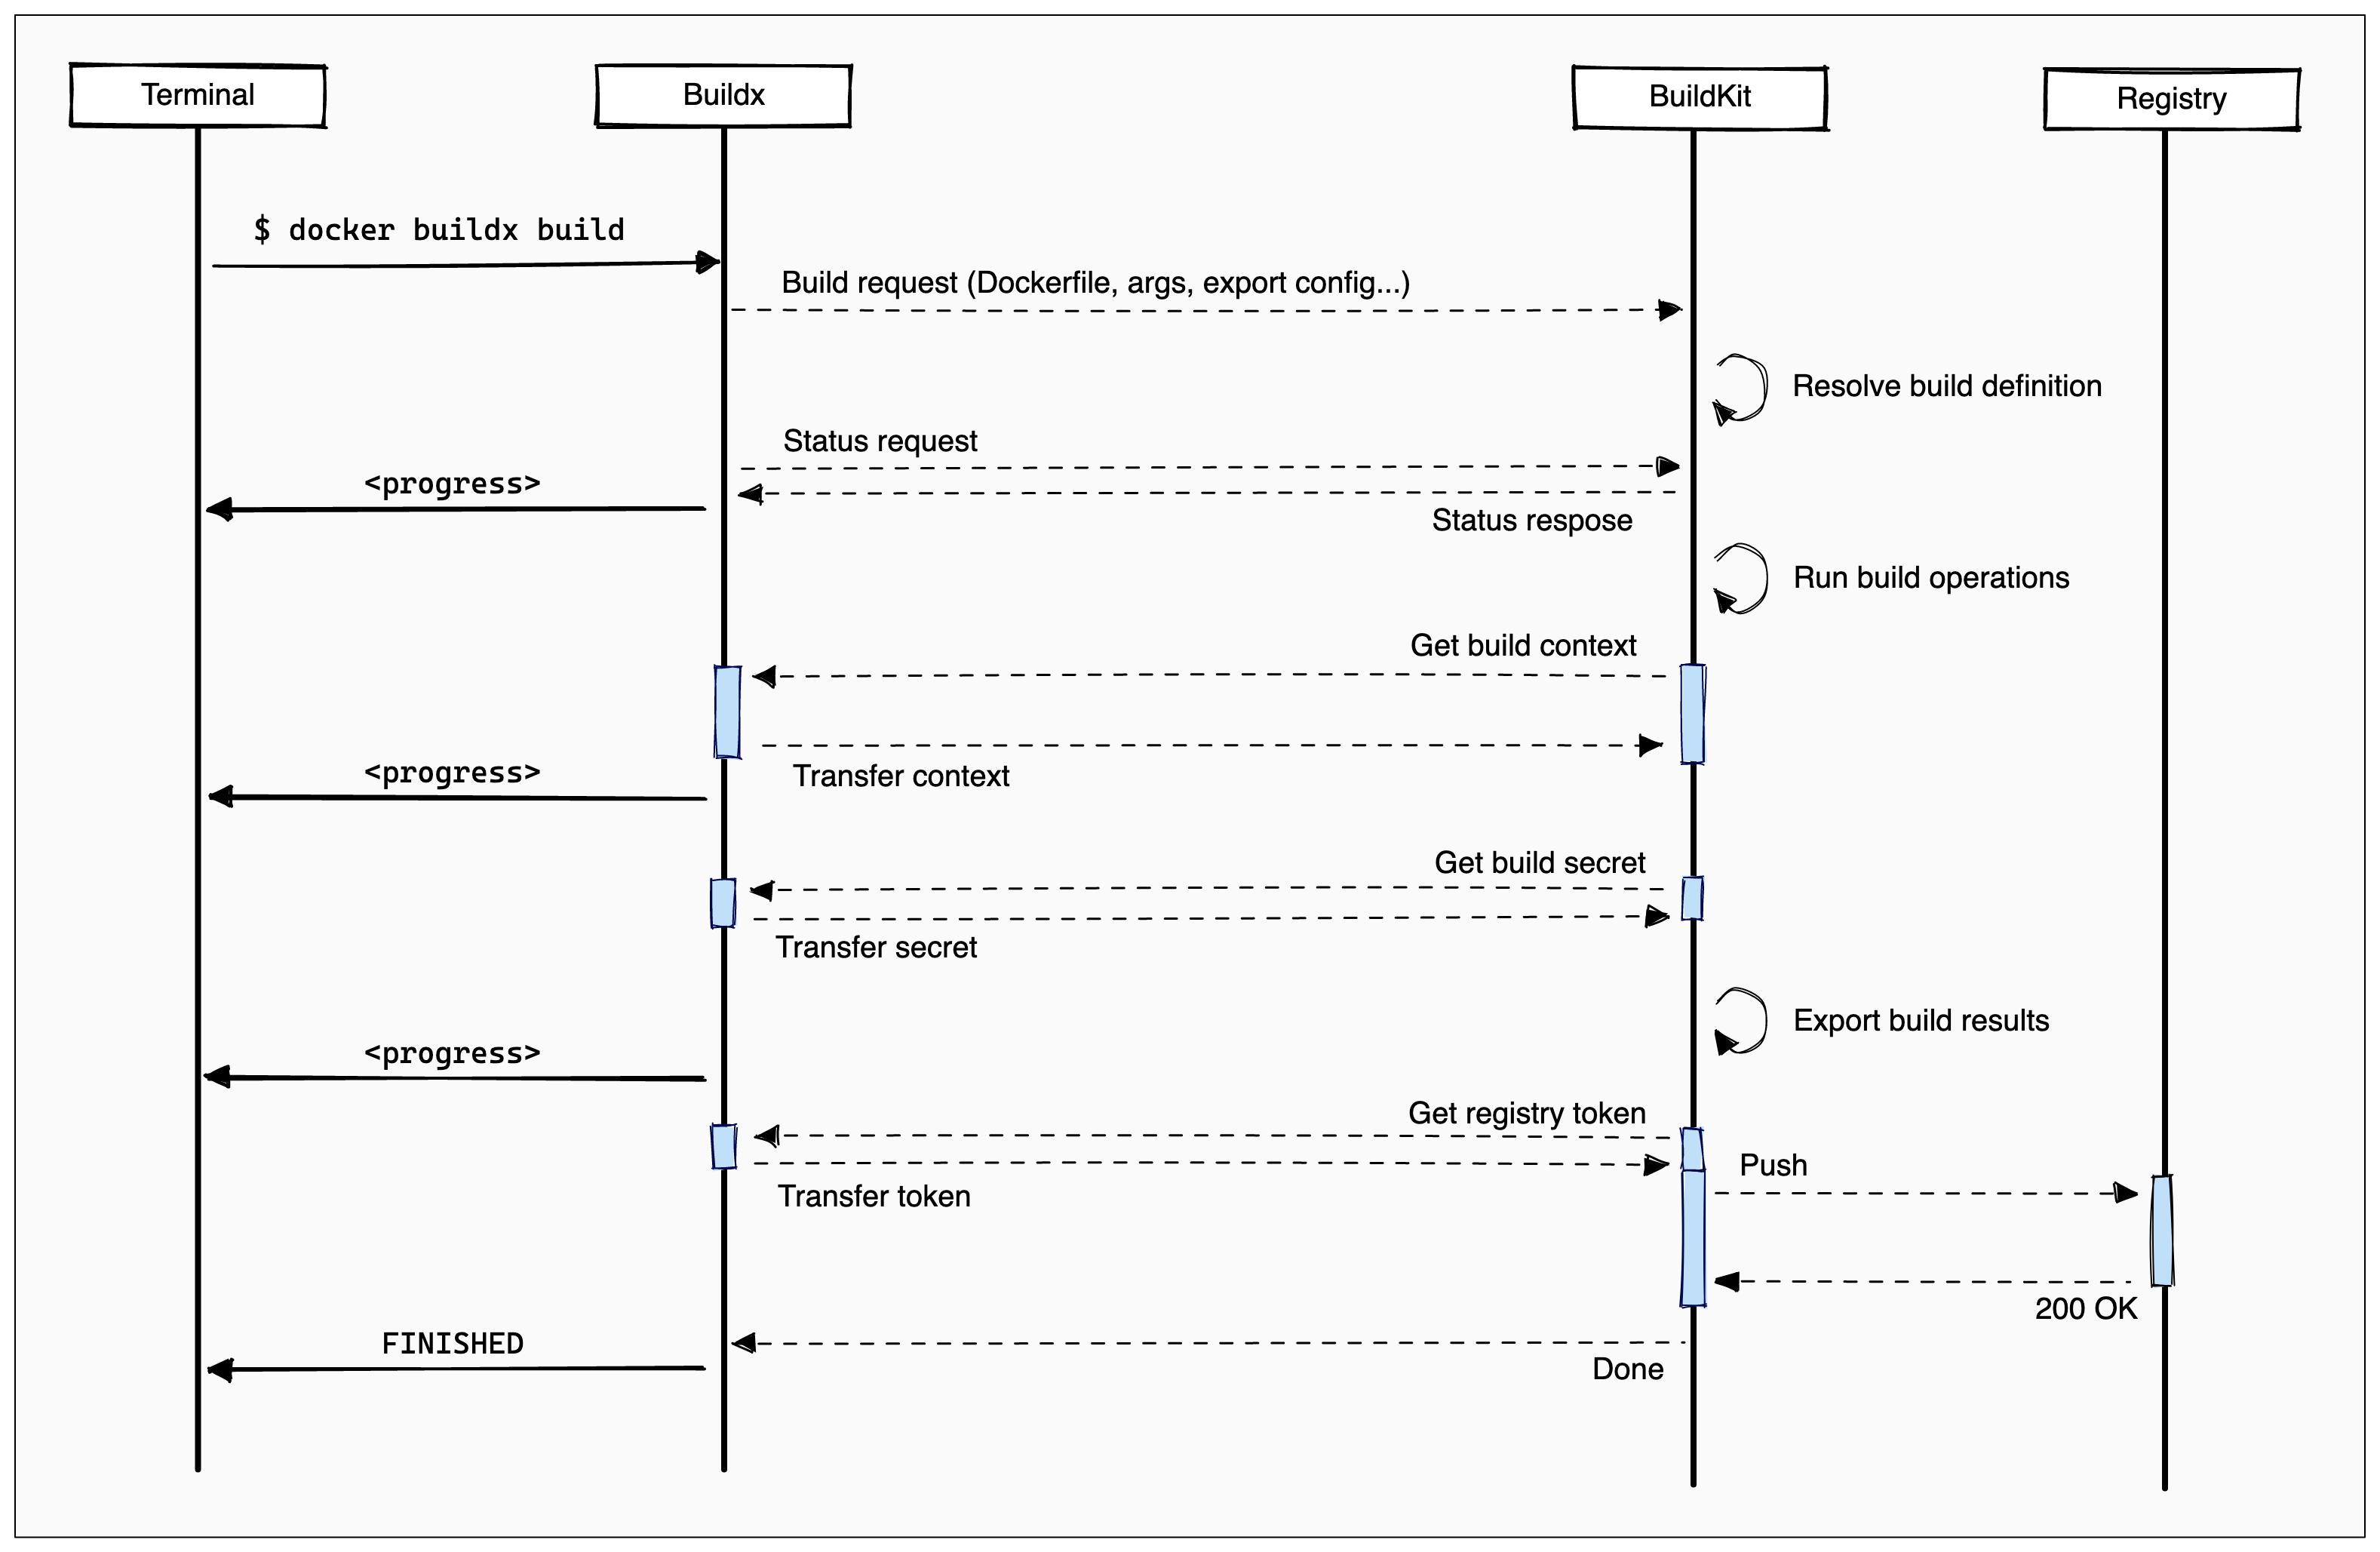 Buildx and BuildKit sequence diagram